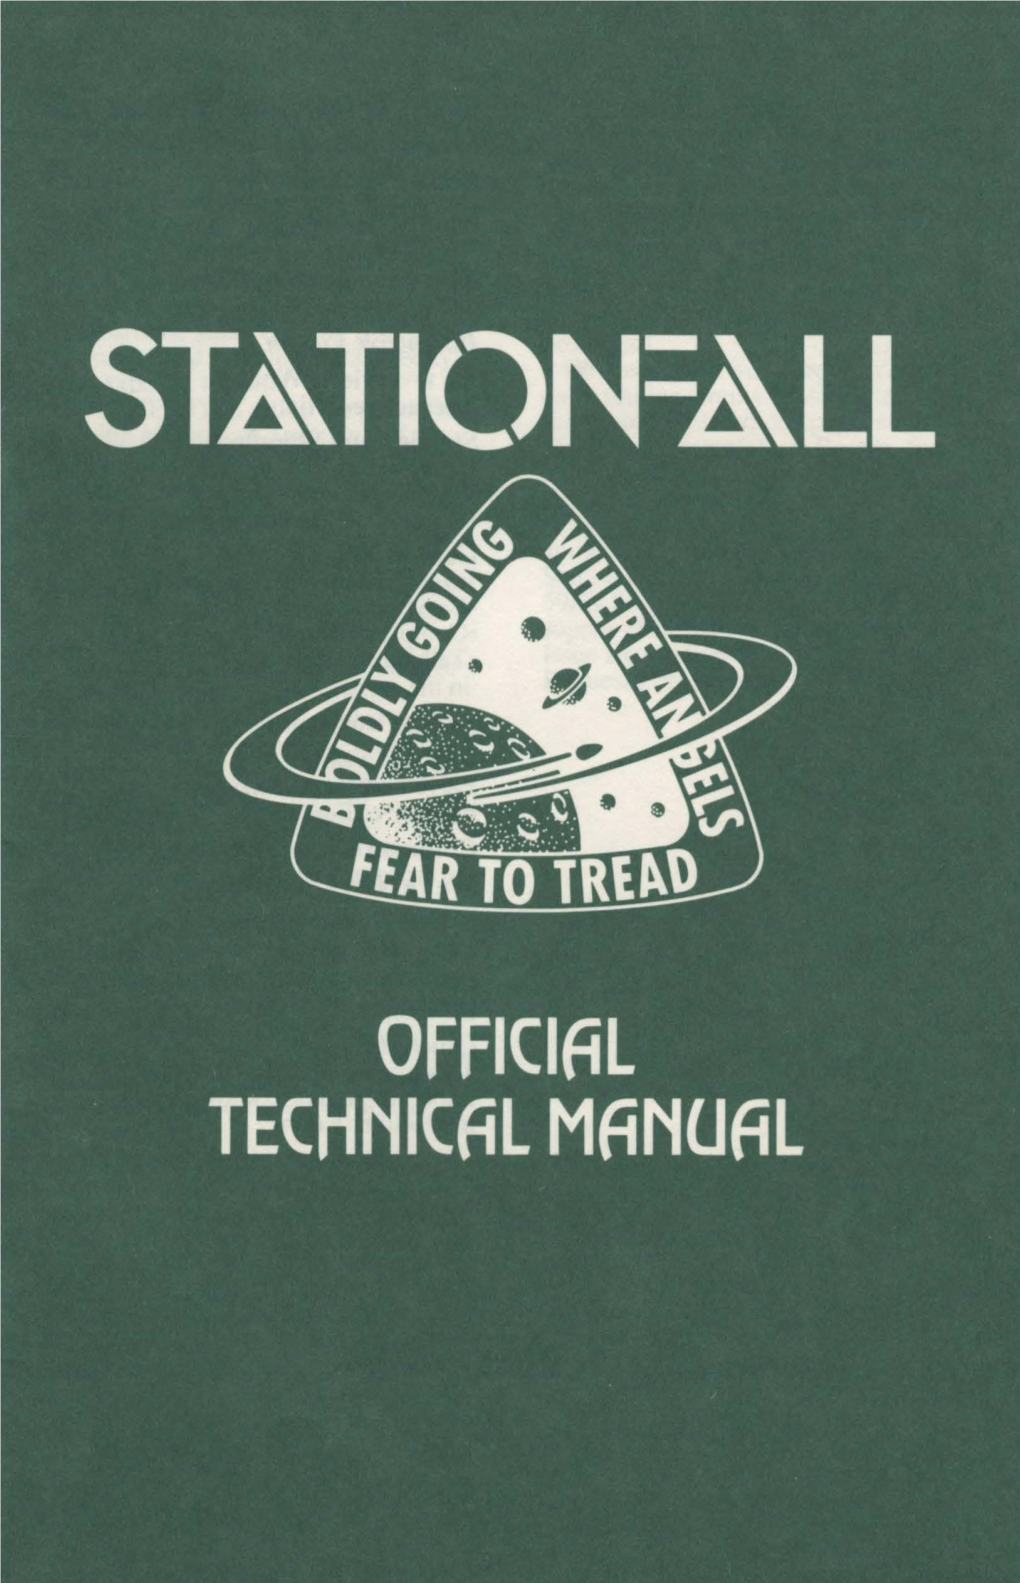 Stationfall-Manual